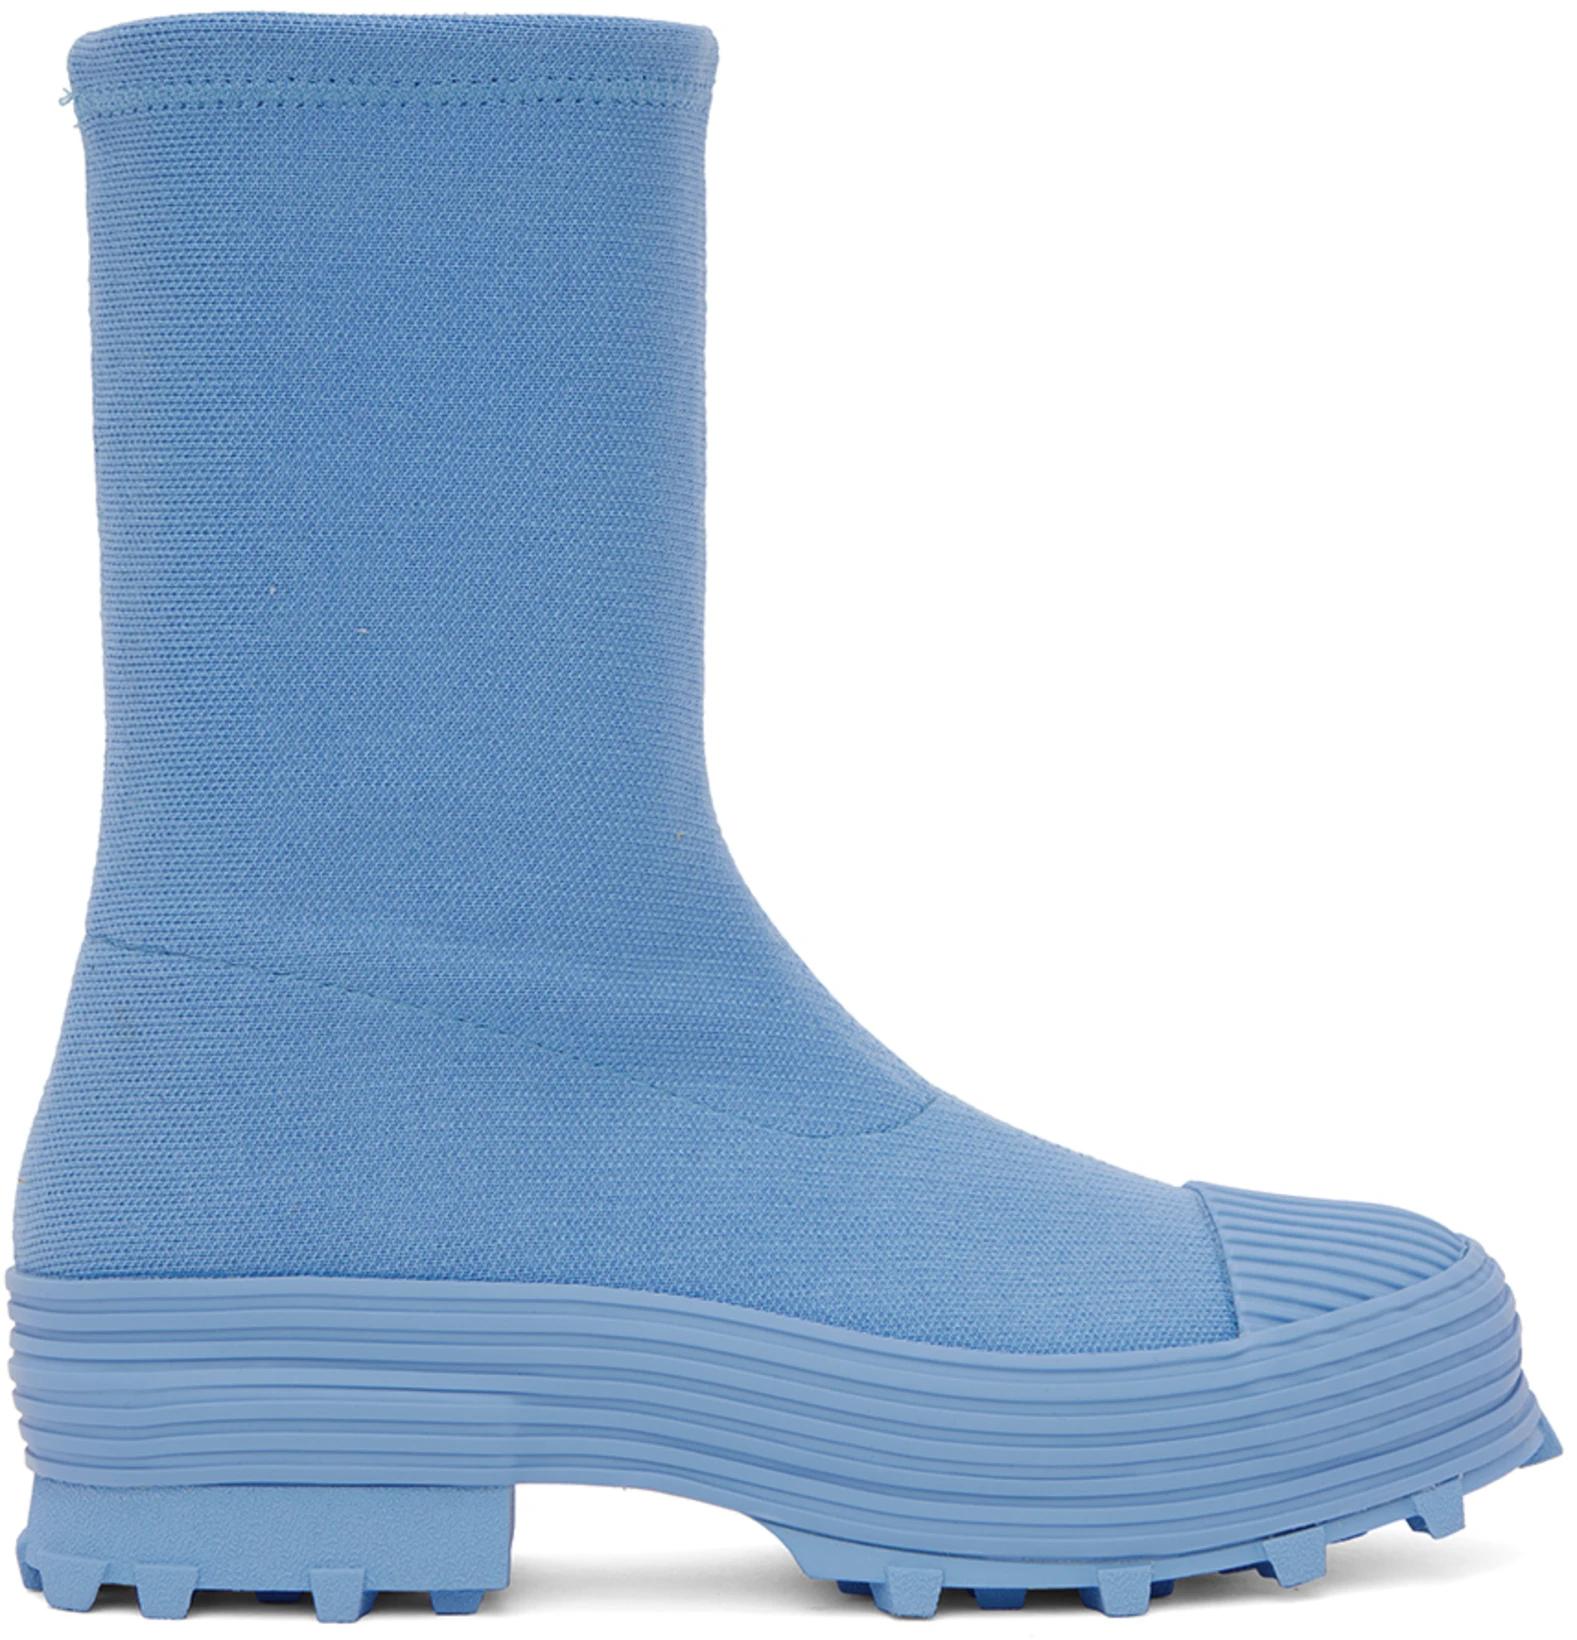 Blue Traktori Ankle Boots by CAMPERLAB